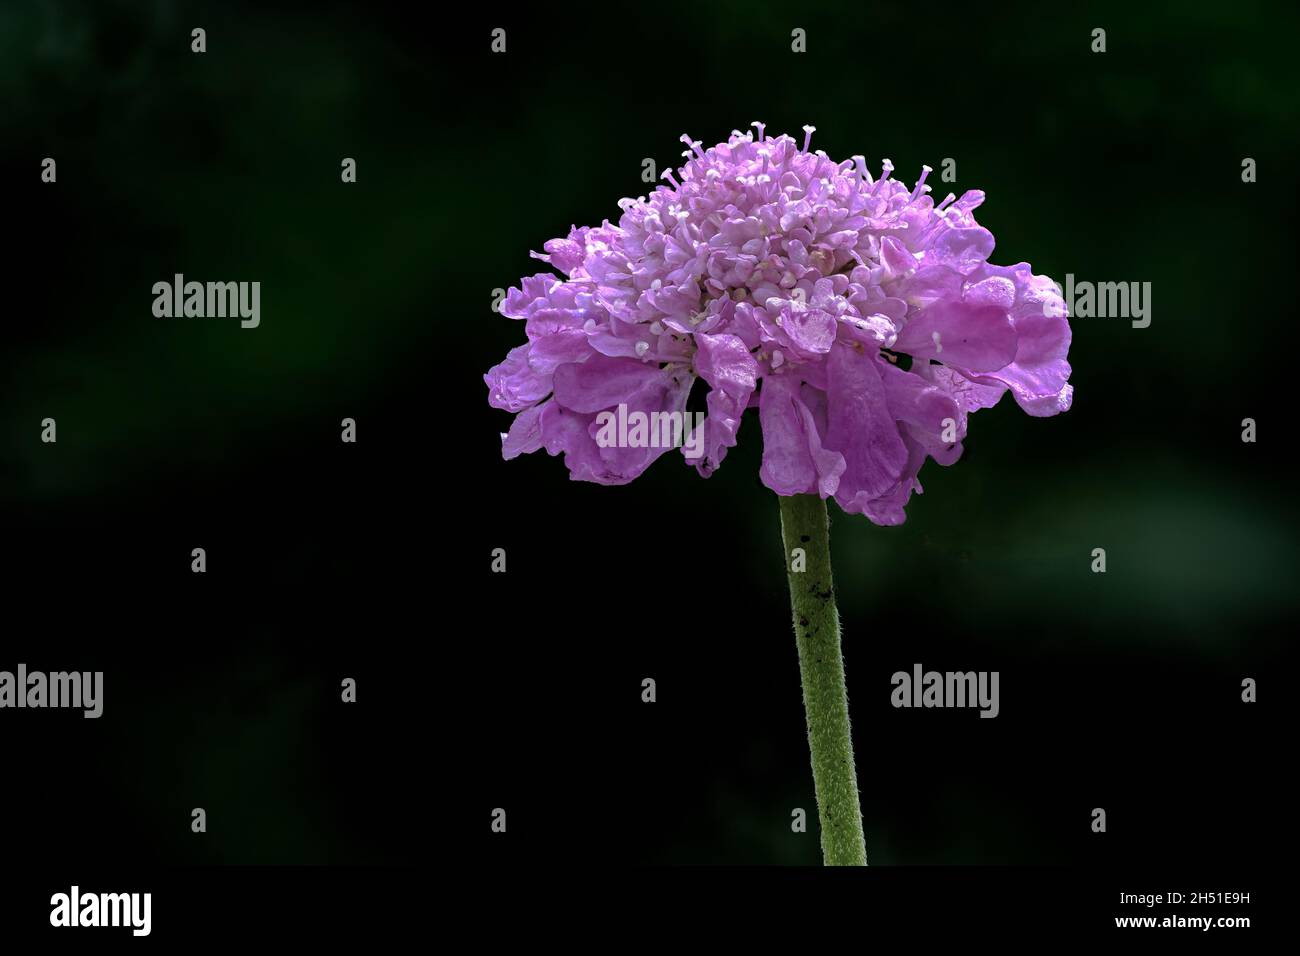 Single pink purple Scabiosa flower against a dark green background Stock Photo